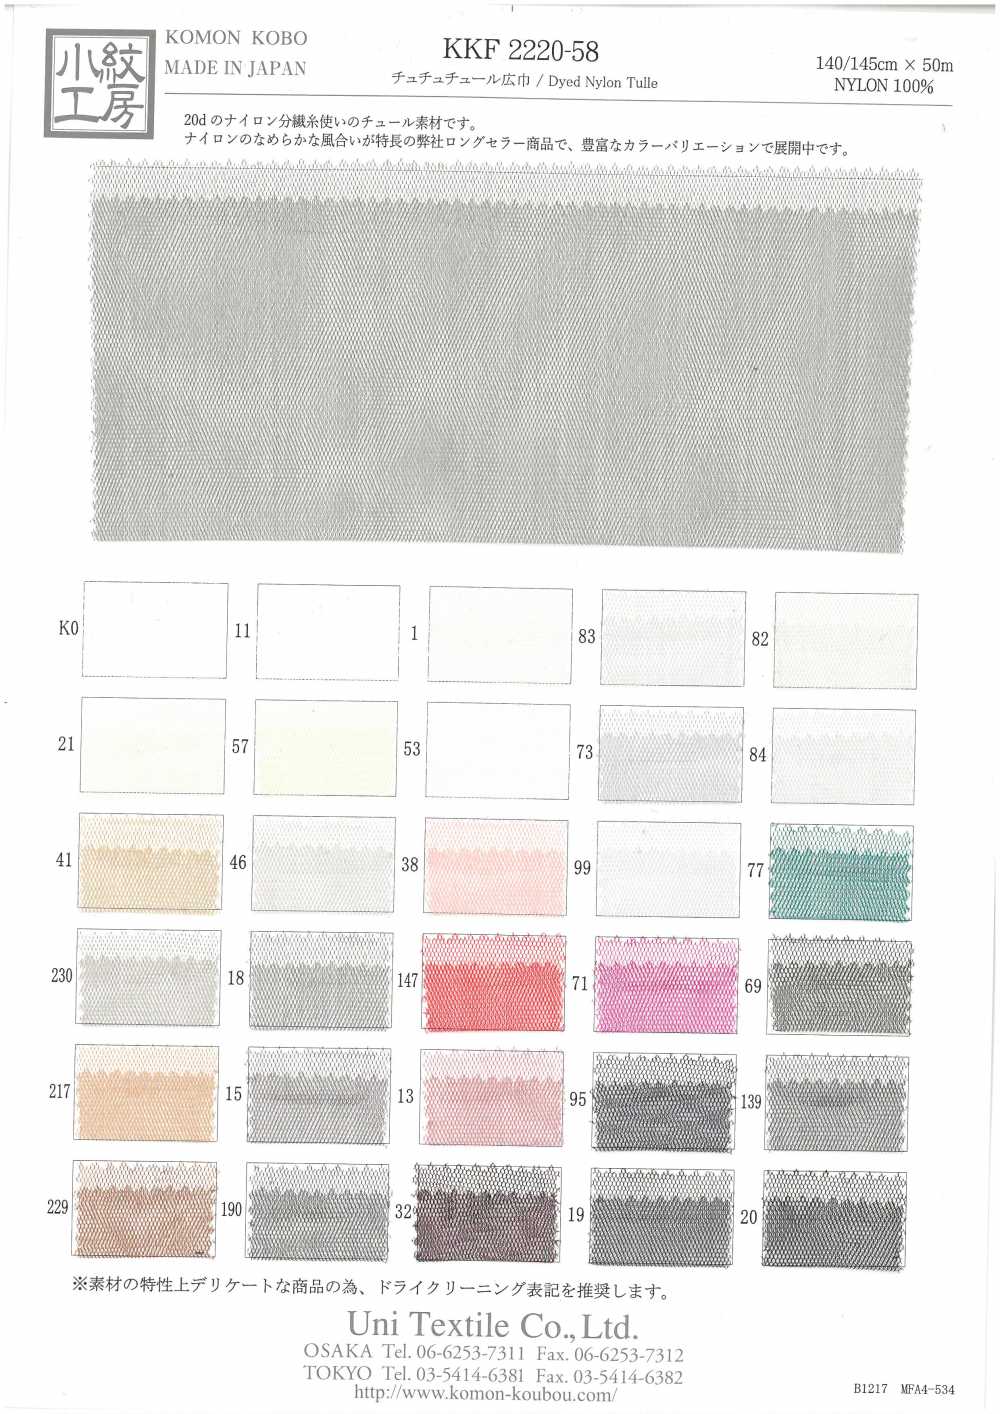 KKF2220-58 Tutu Tule De Largura Larga[Têxtil / Tecido] Uni Textile